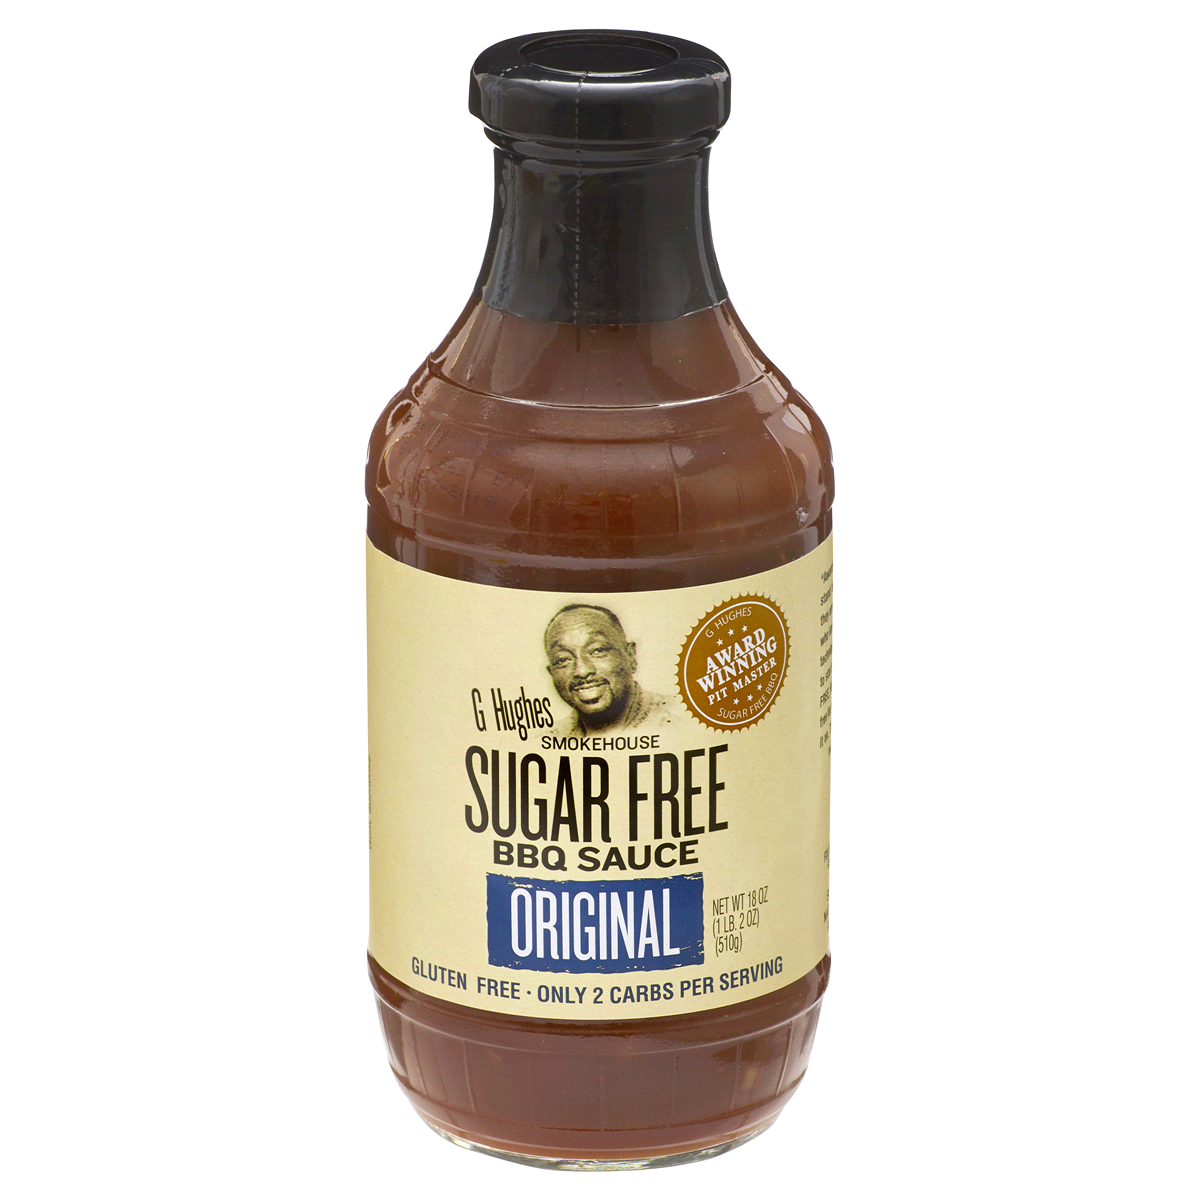 G Hughes Sugar Free Barbecue Sauce Original